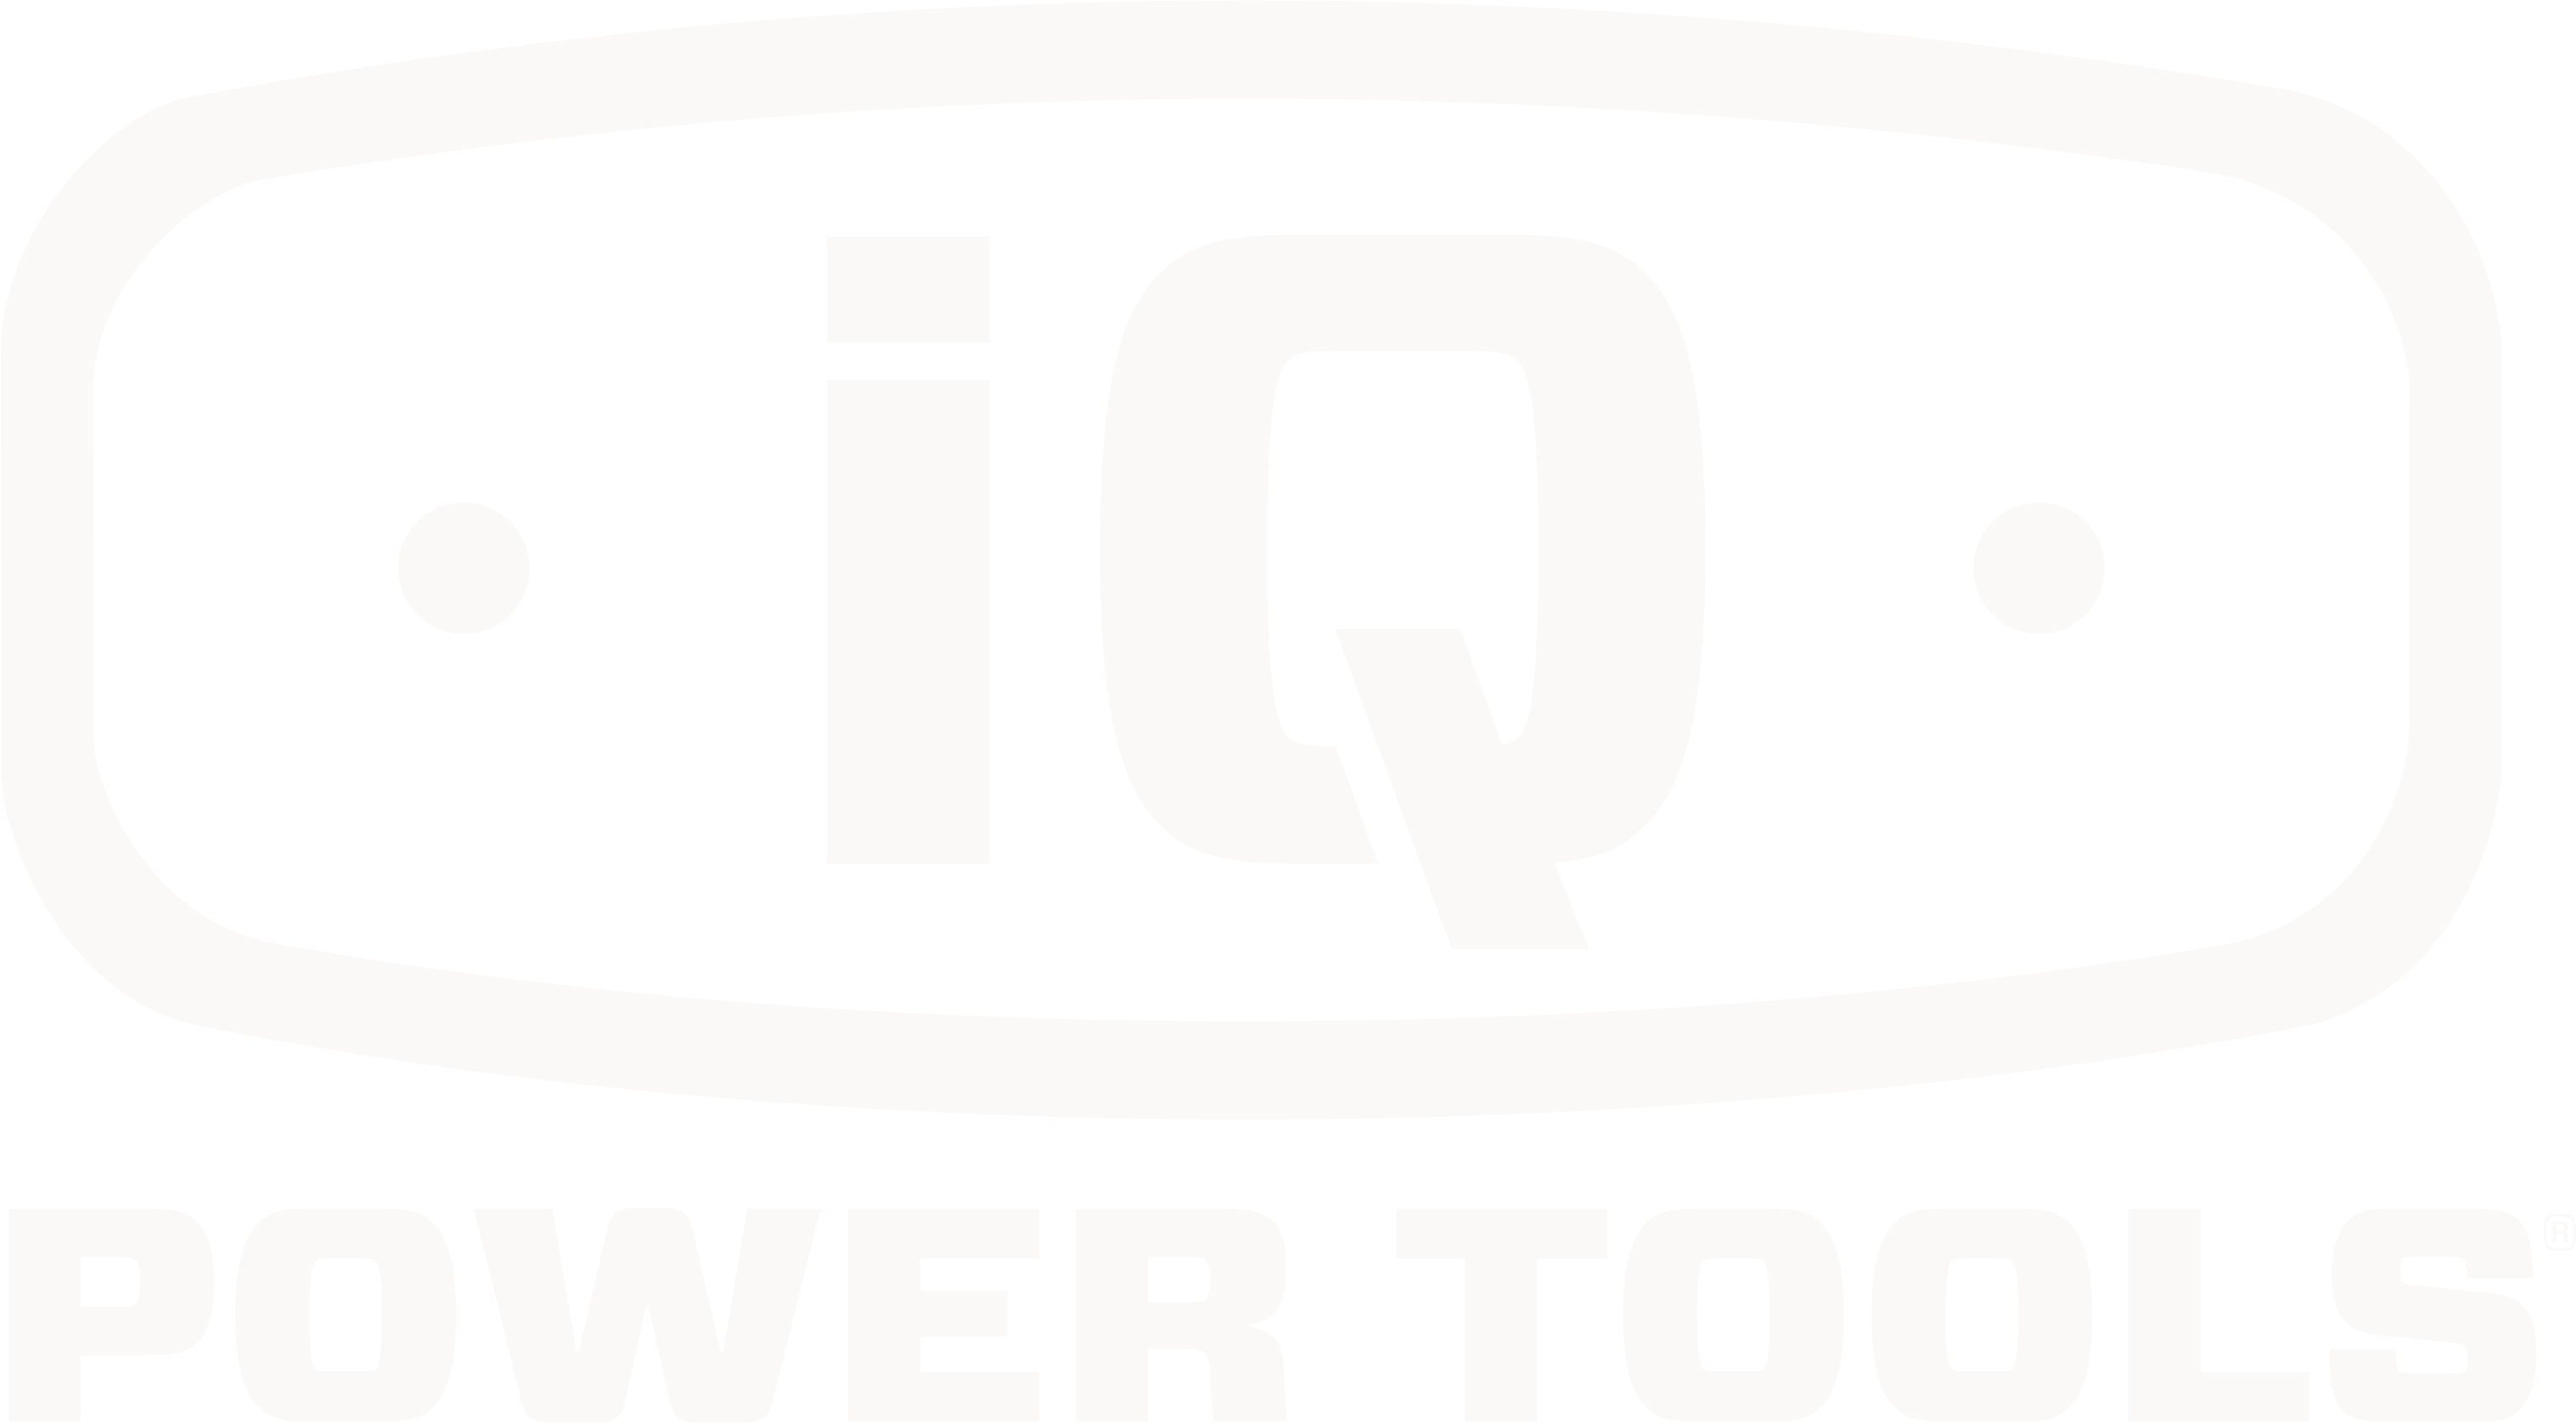 Premium Vector | Power tool logo for professional company